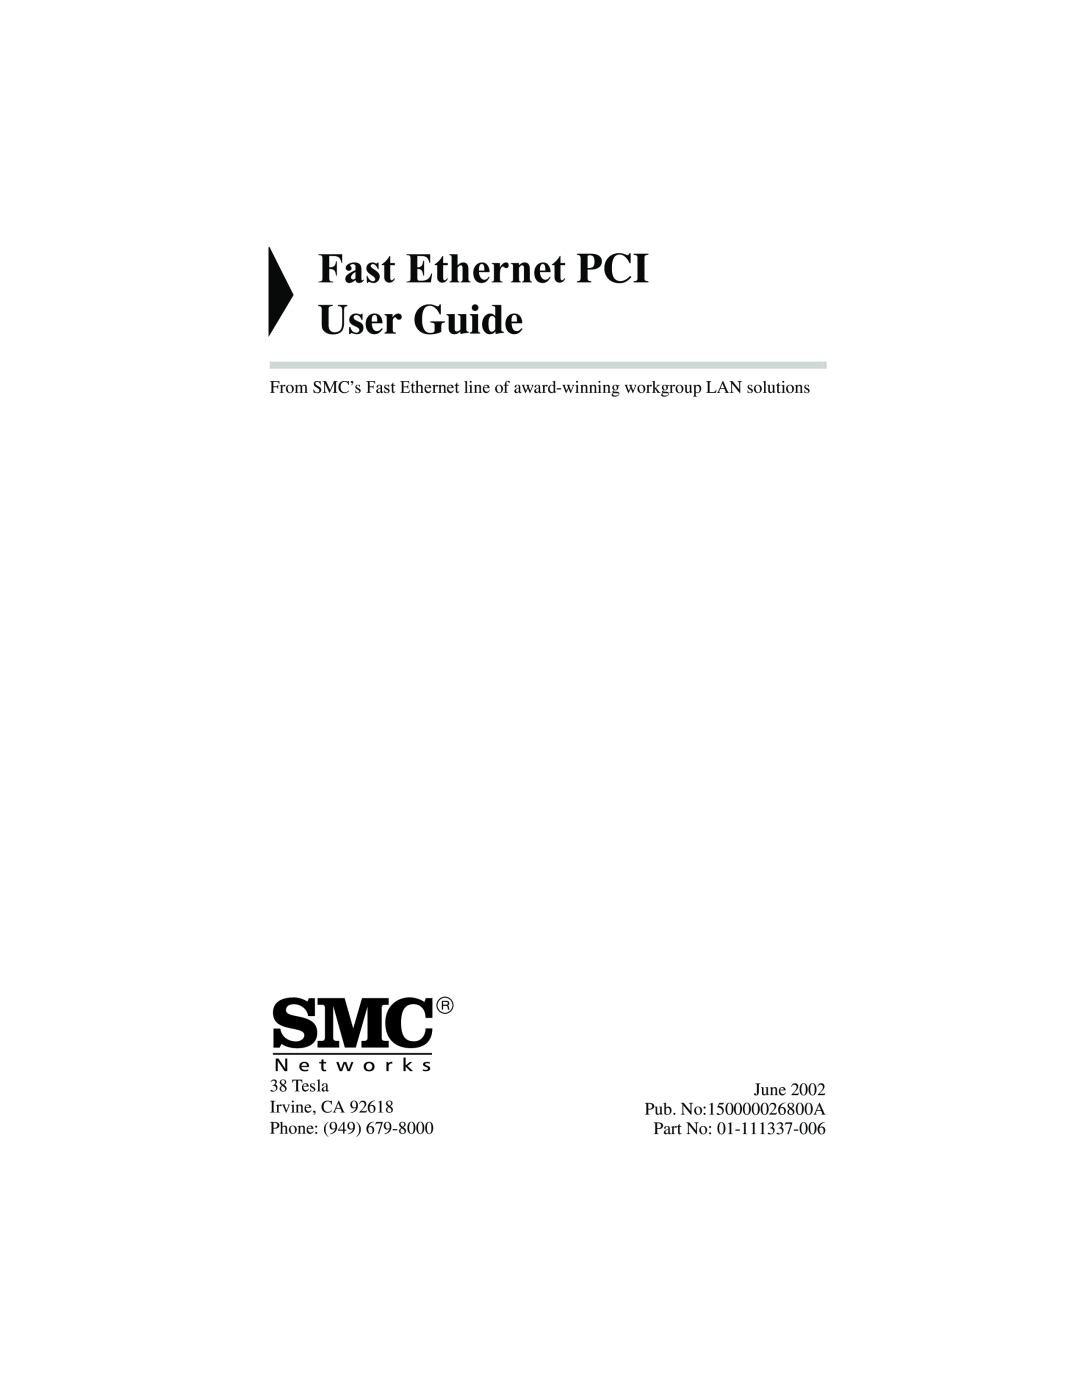 SMC Networks 10/100 Mbps manual Fast Ethernet PCI User Guide, Tesla, June, Irvine, CA, Pub. No150000026800A, Phone 949 